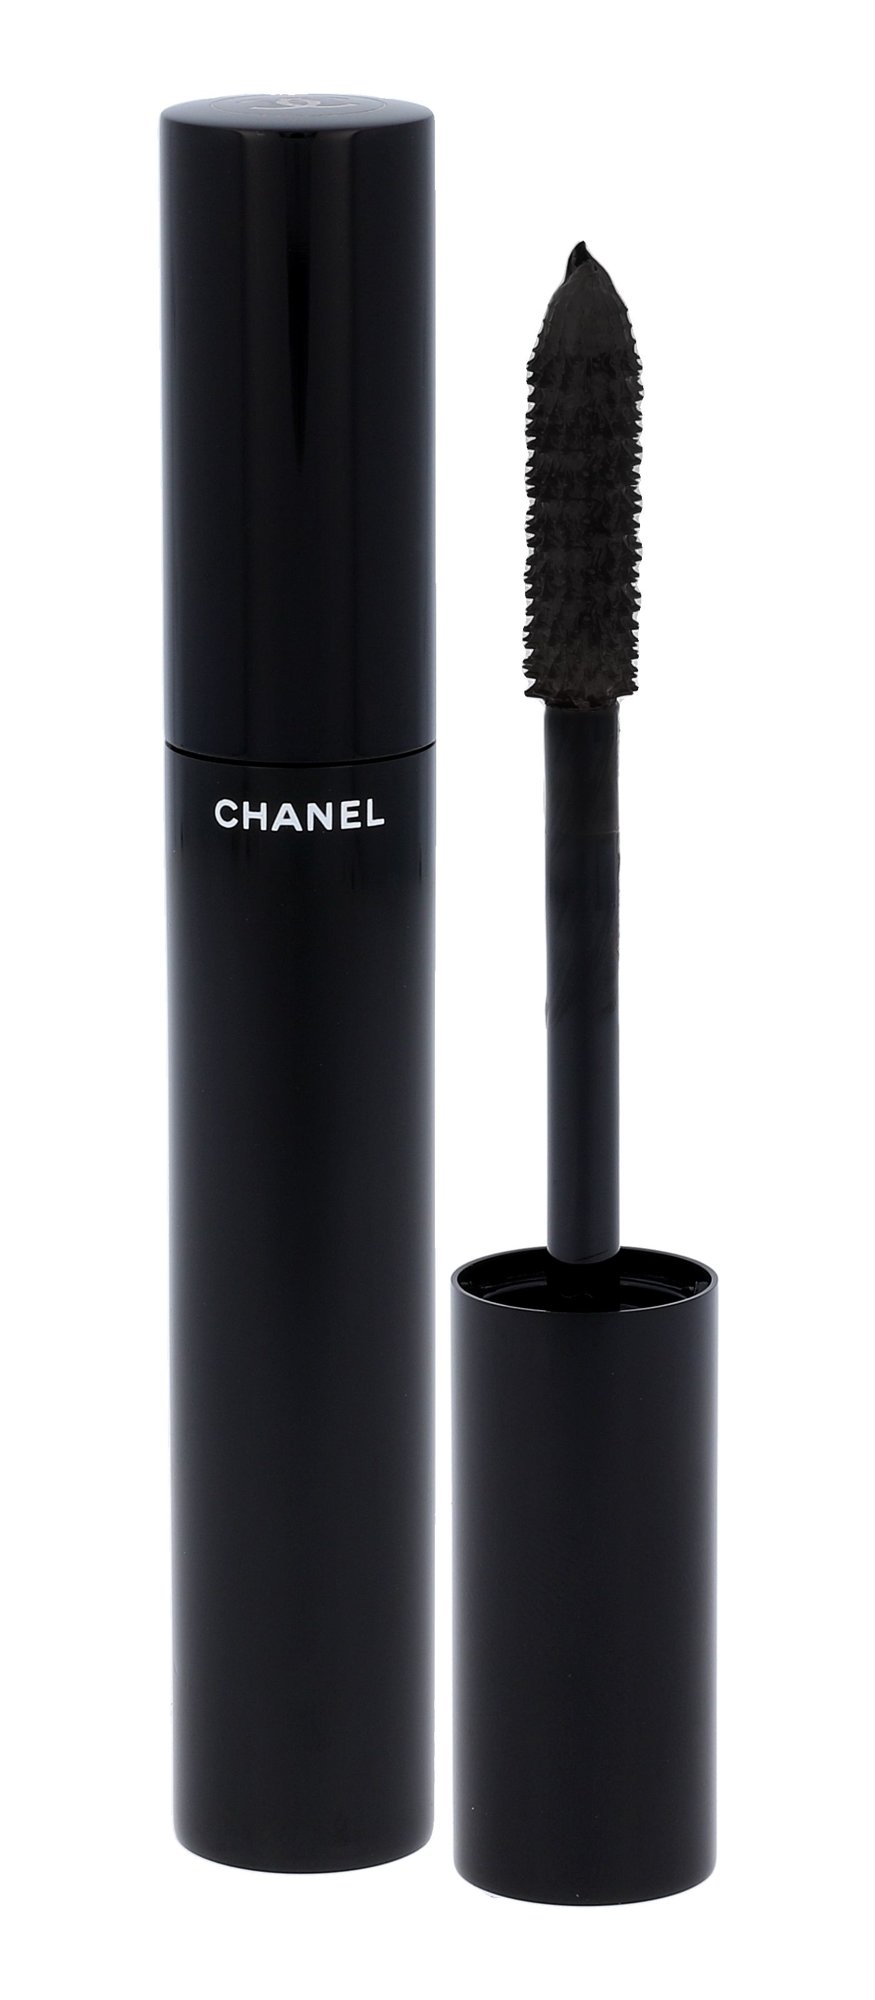 Chanel Le Volume De Chanel Mascara Waterproof